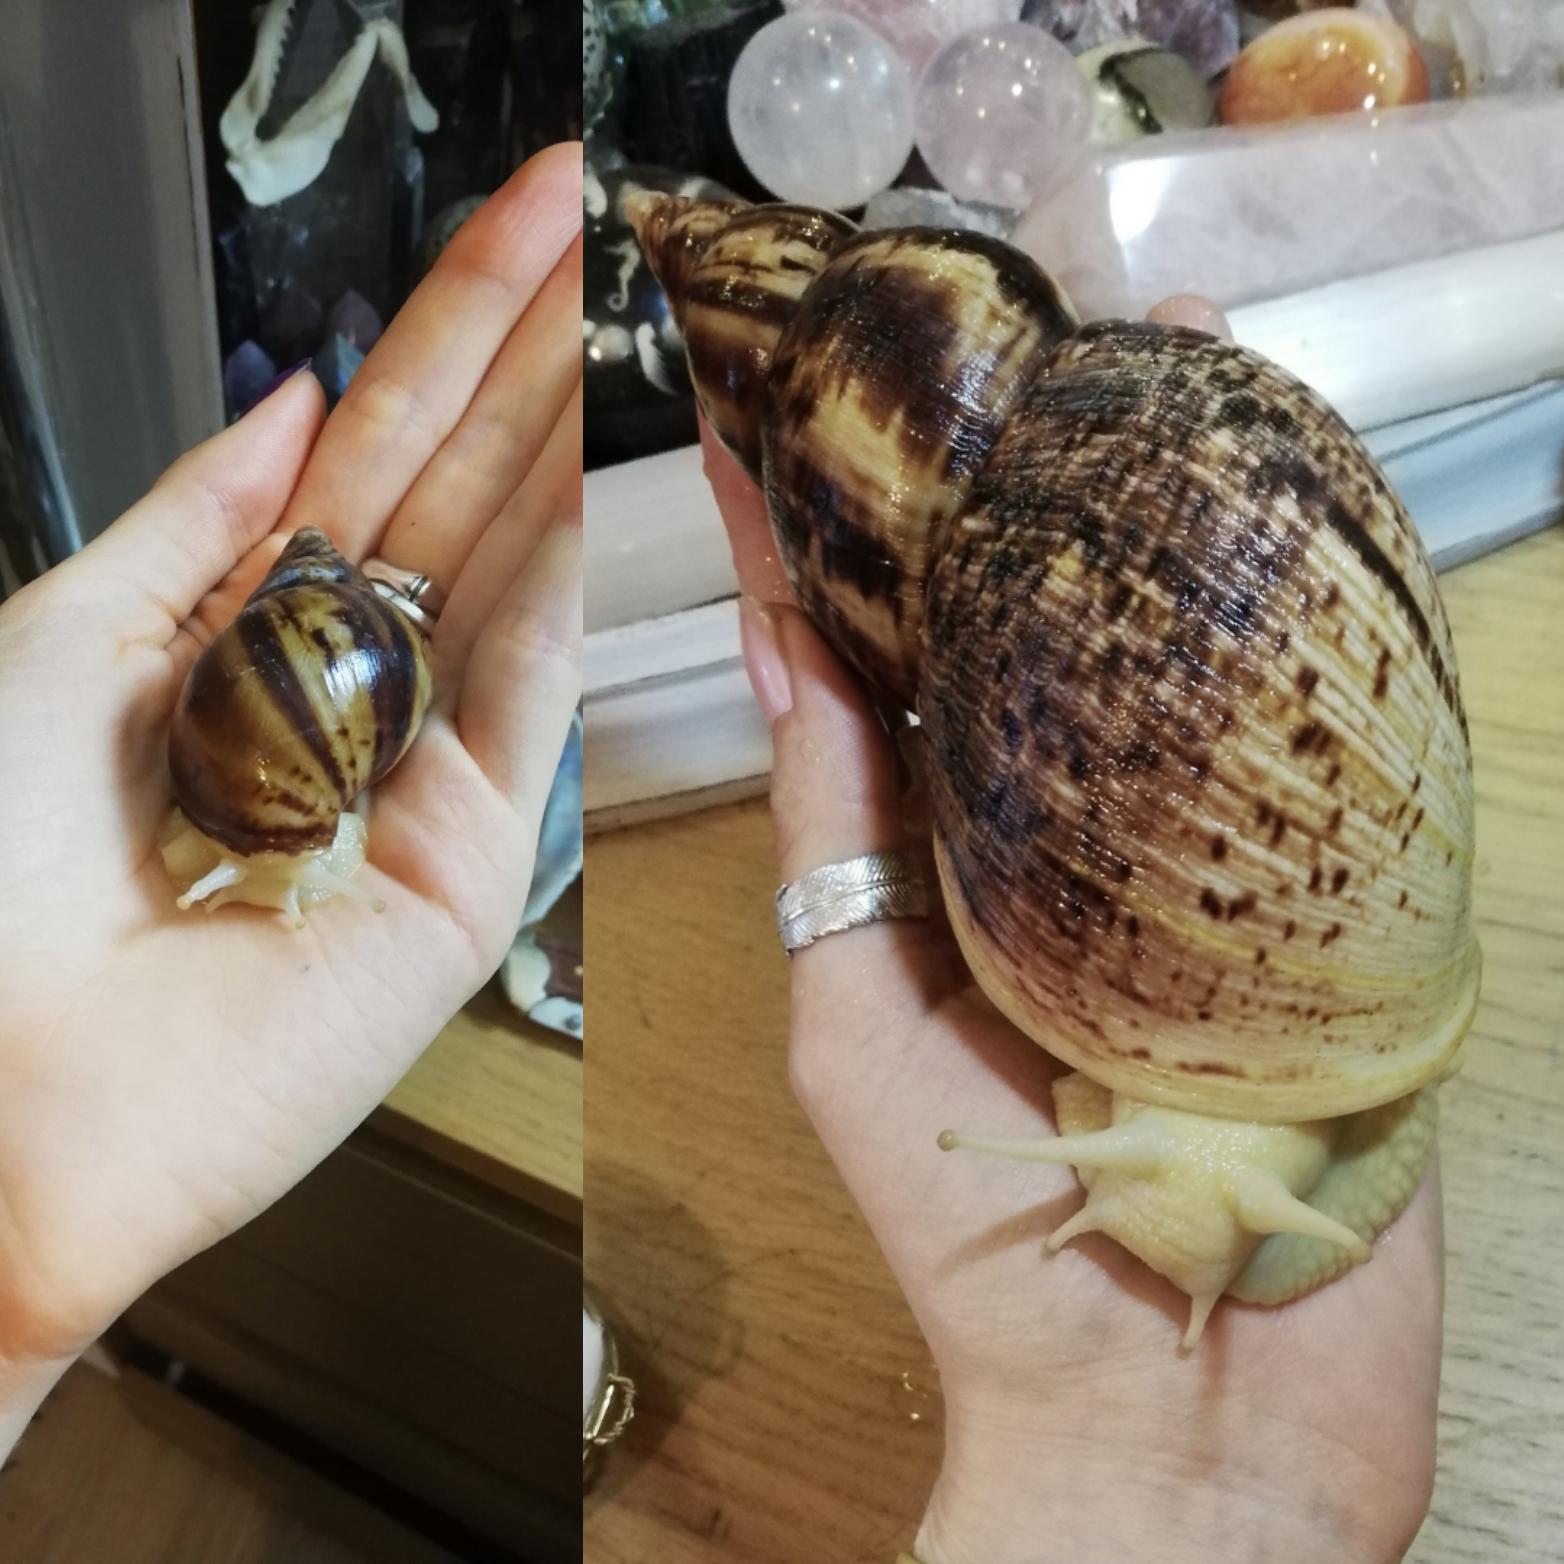 How quickly do snails grow?